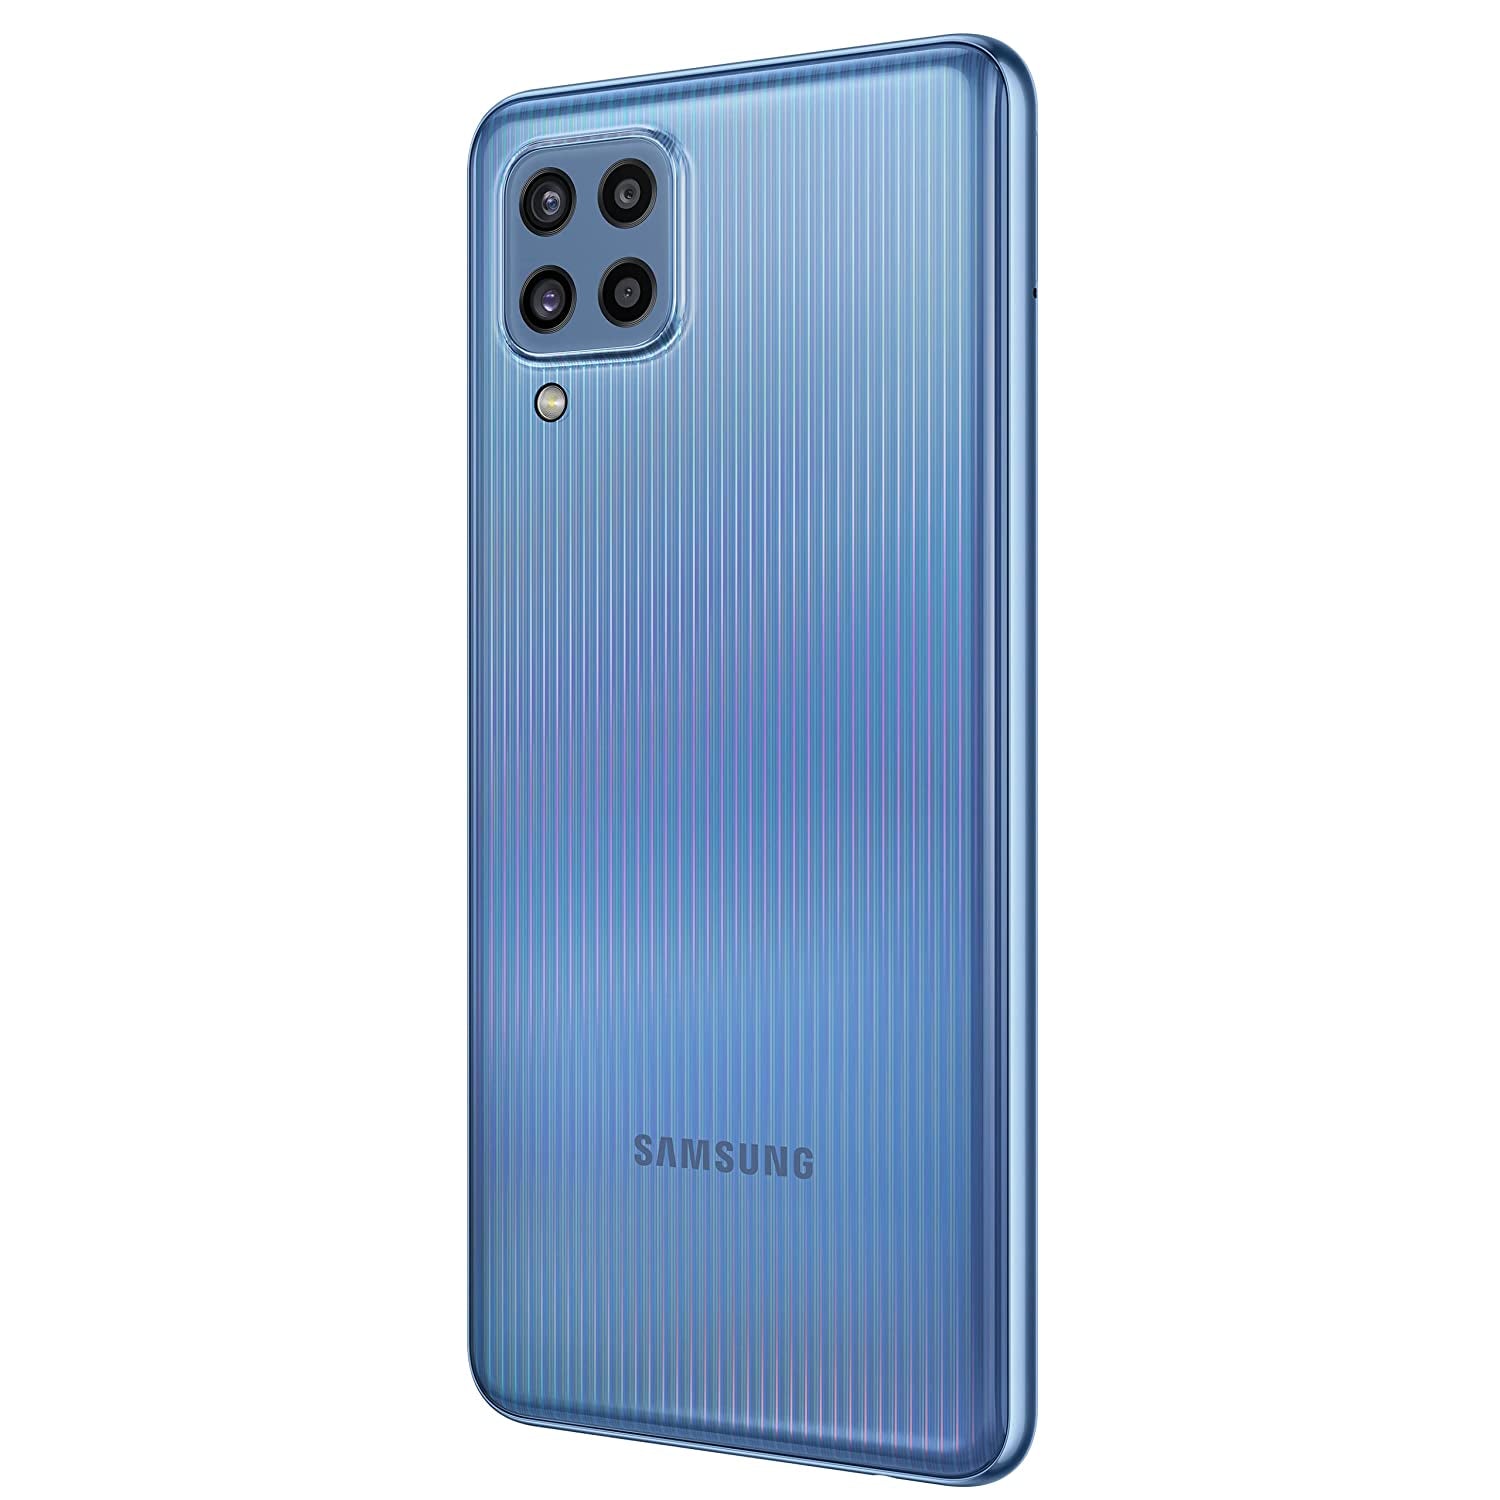 SAMSUNG Galaxy M32 (Light Blue, 64 GB)  (4 GB RAM)